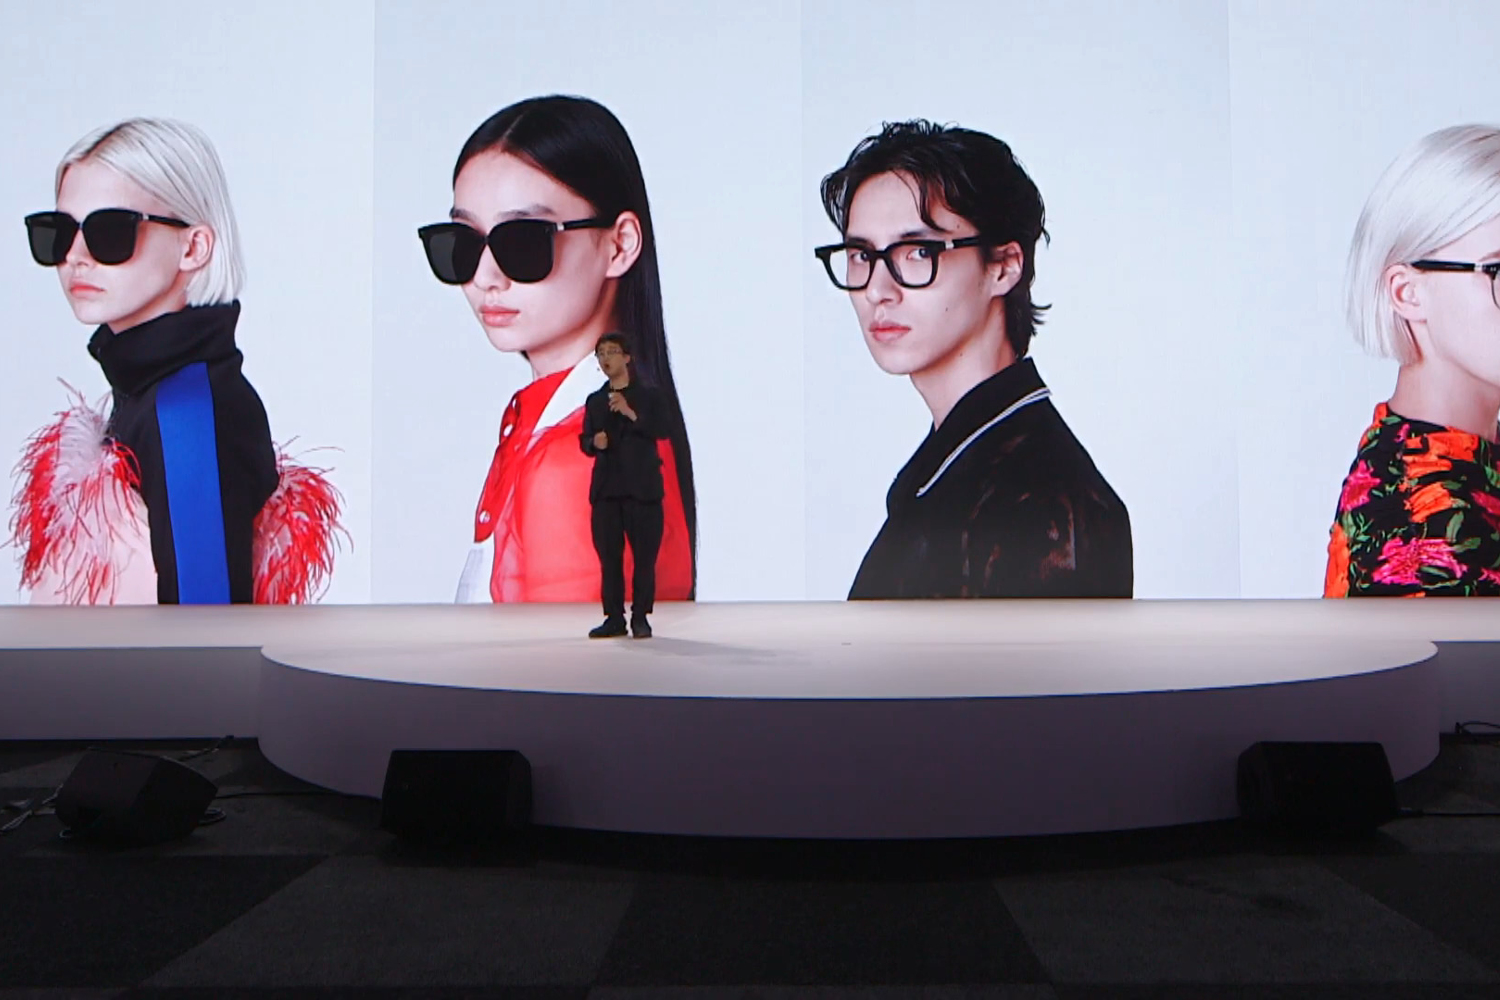 Huawei's Eyewear Smartglasses Are All About Style | Digital